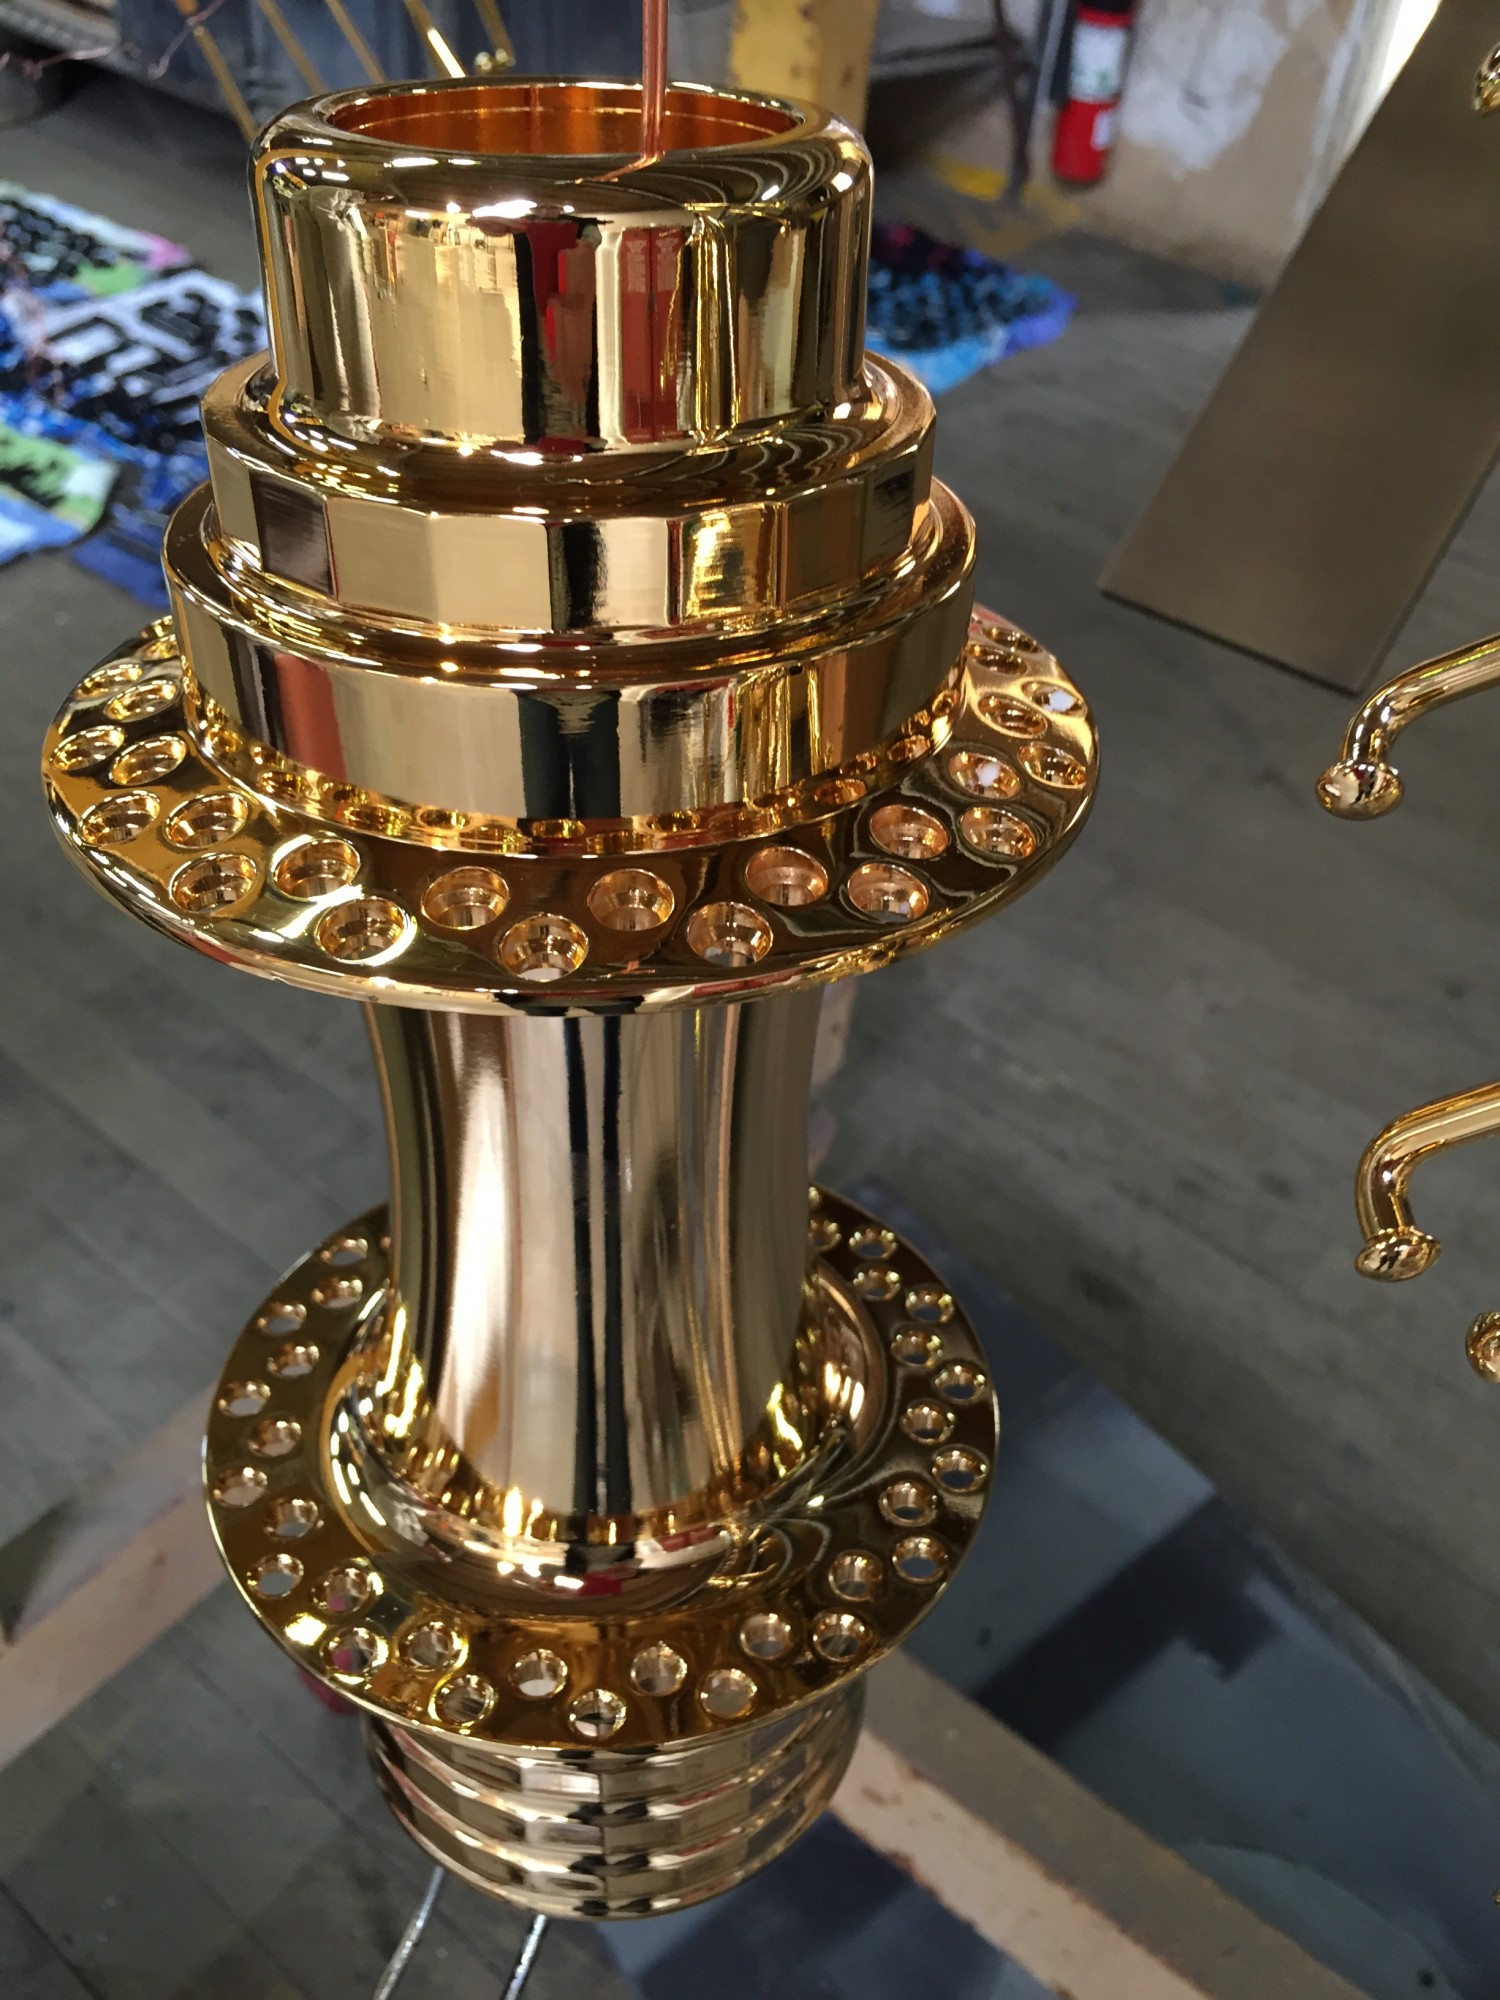 Mirror polished & Gold plated wheel hub